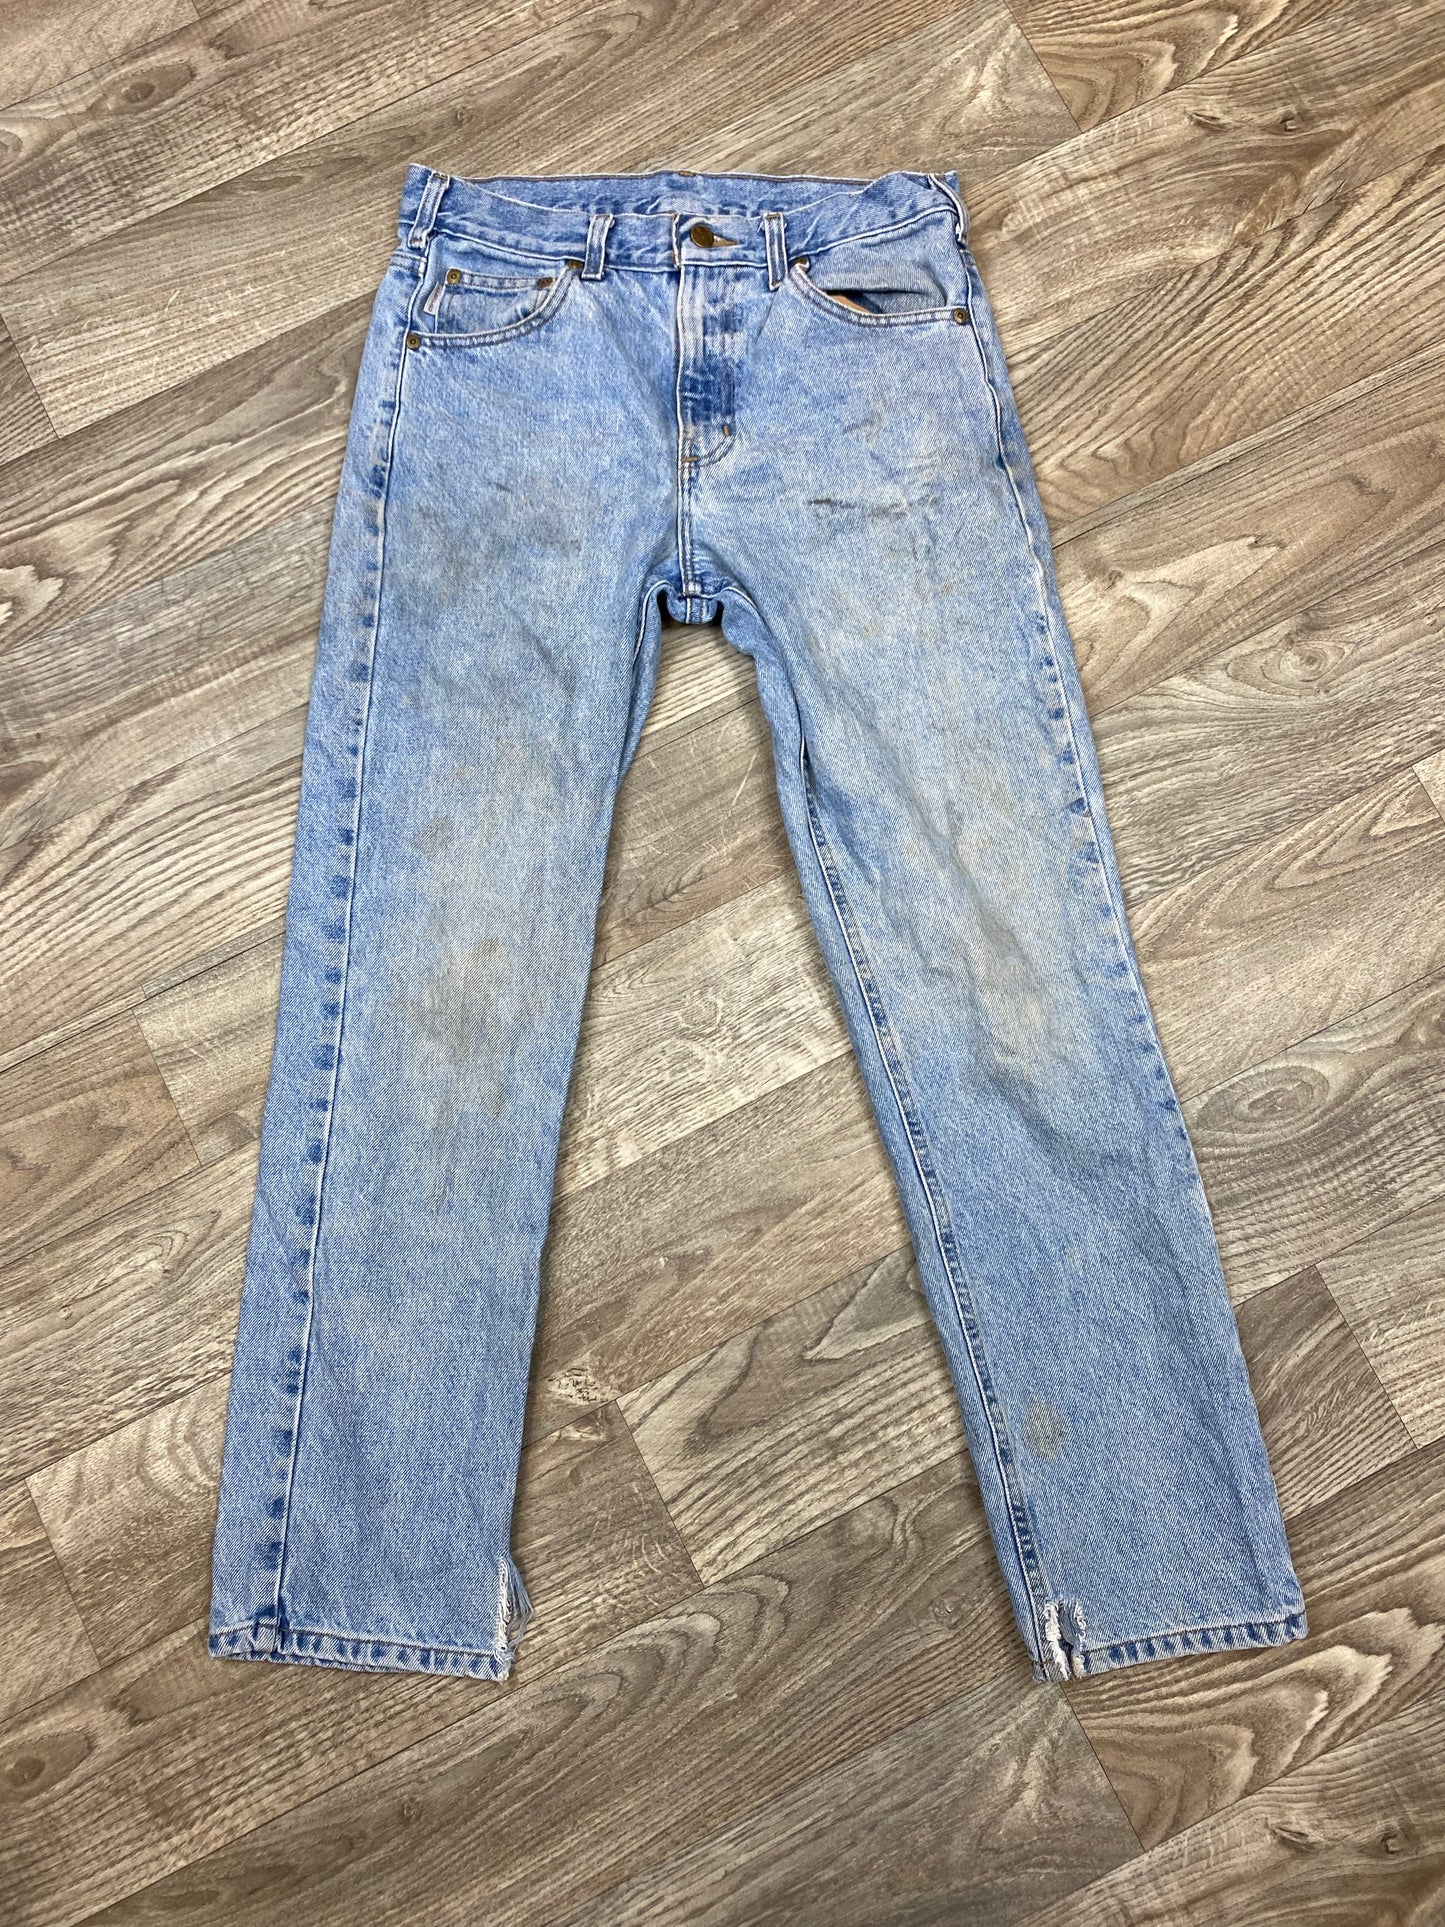 Vintage Carhartt Distressed Denim Pants 30x30